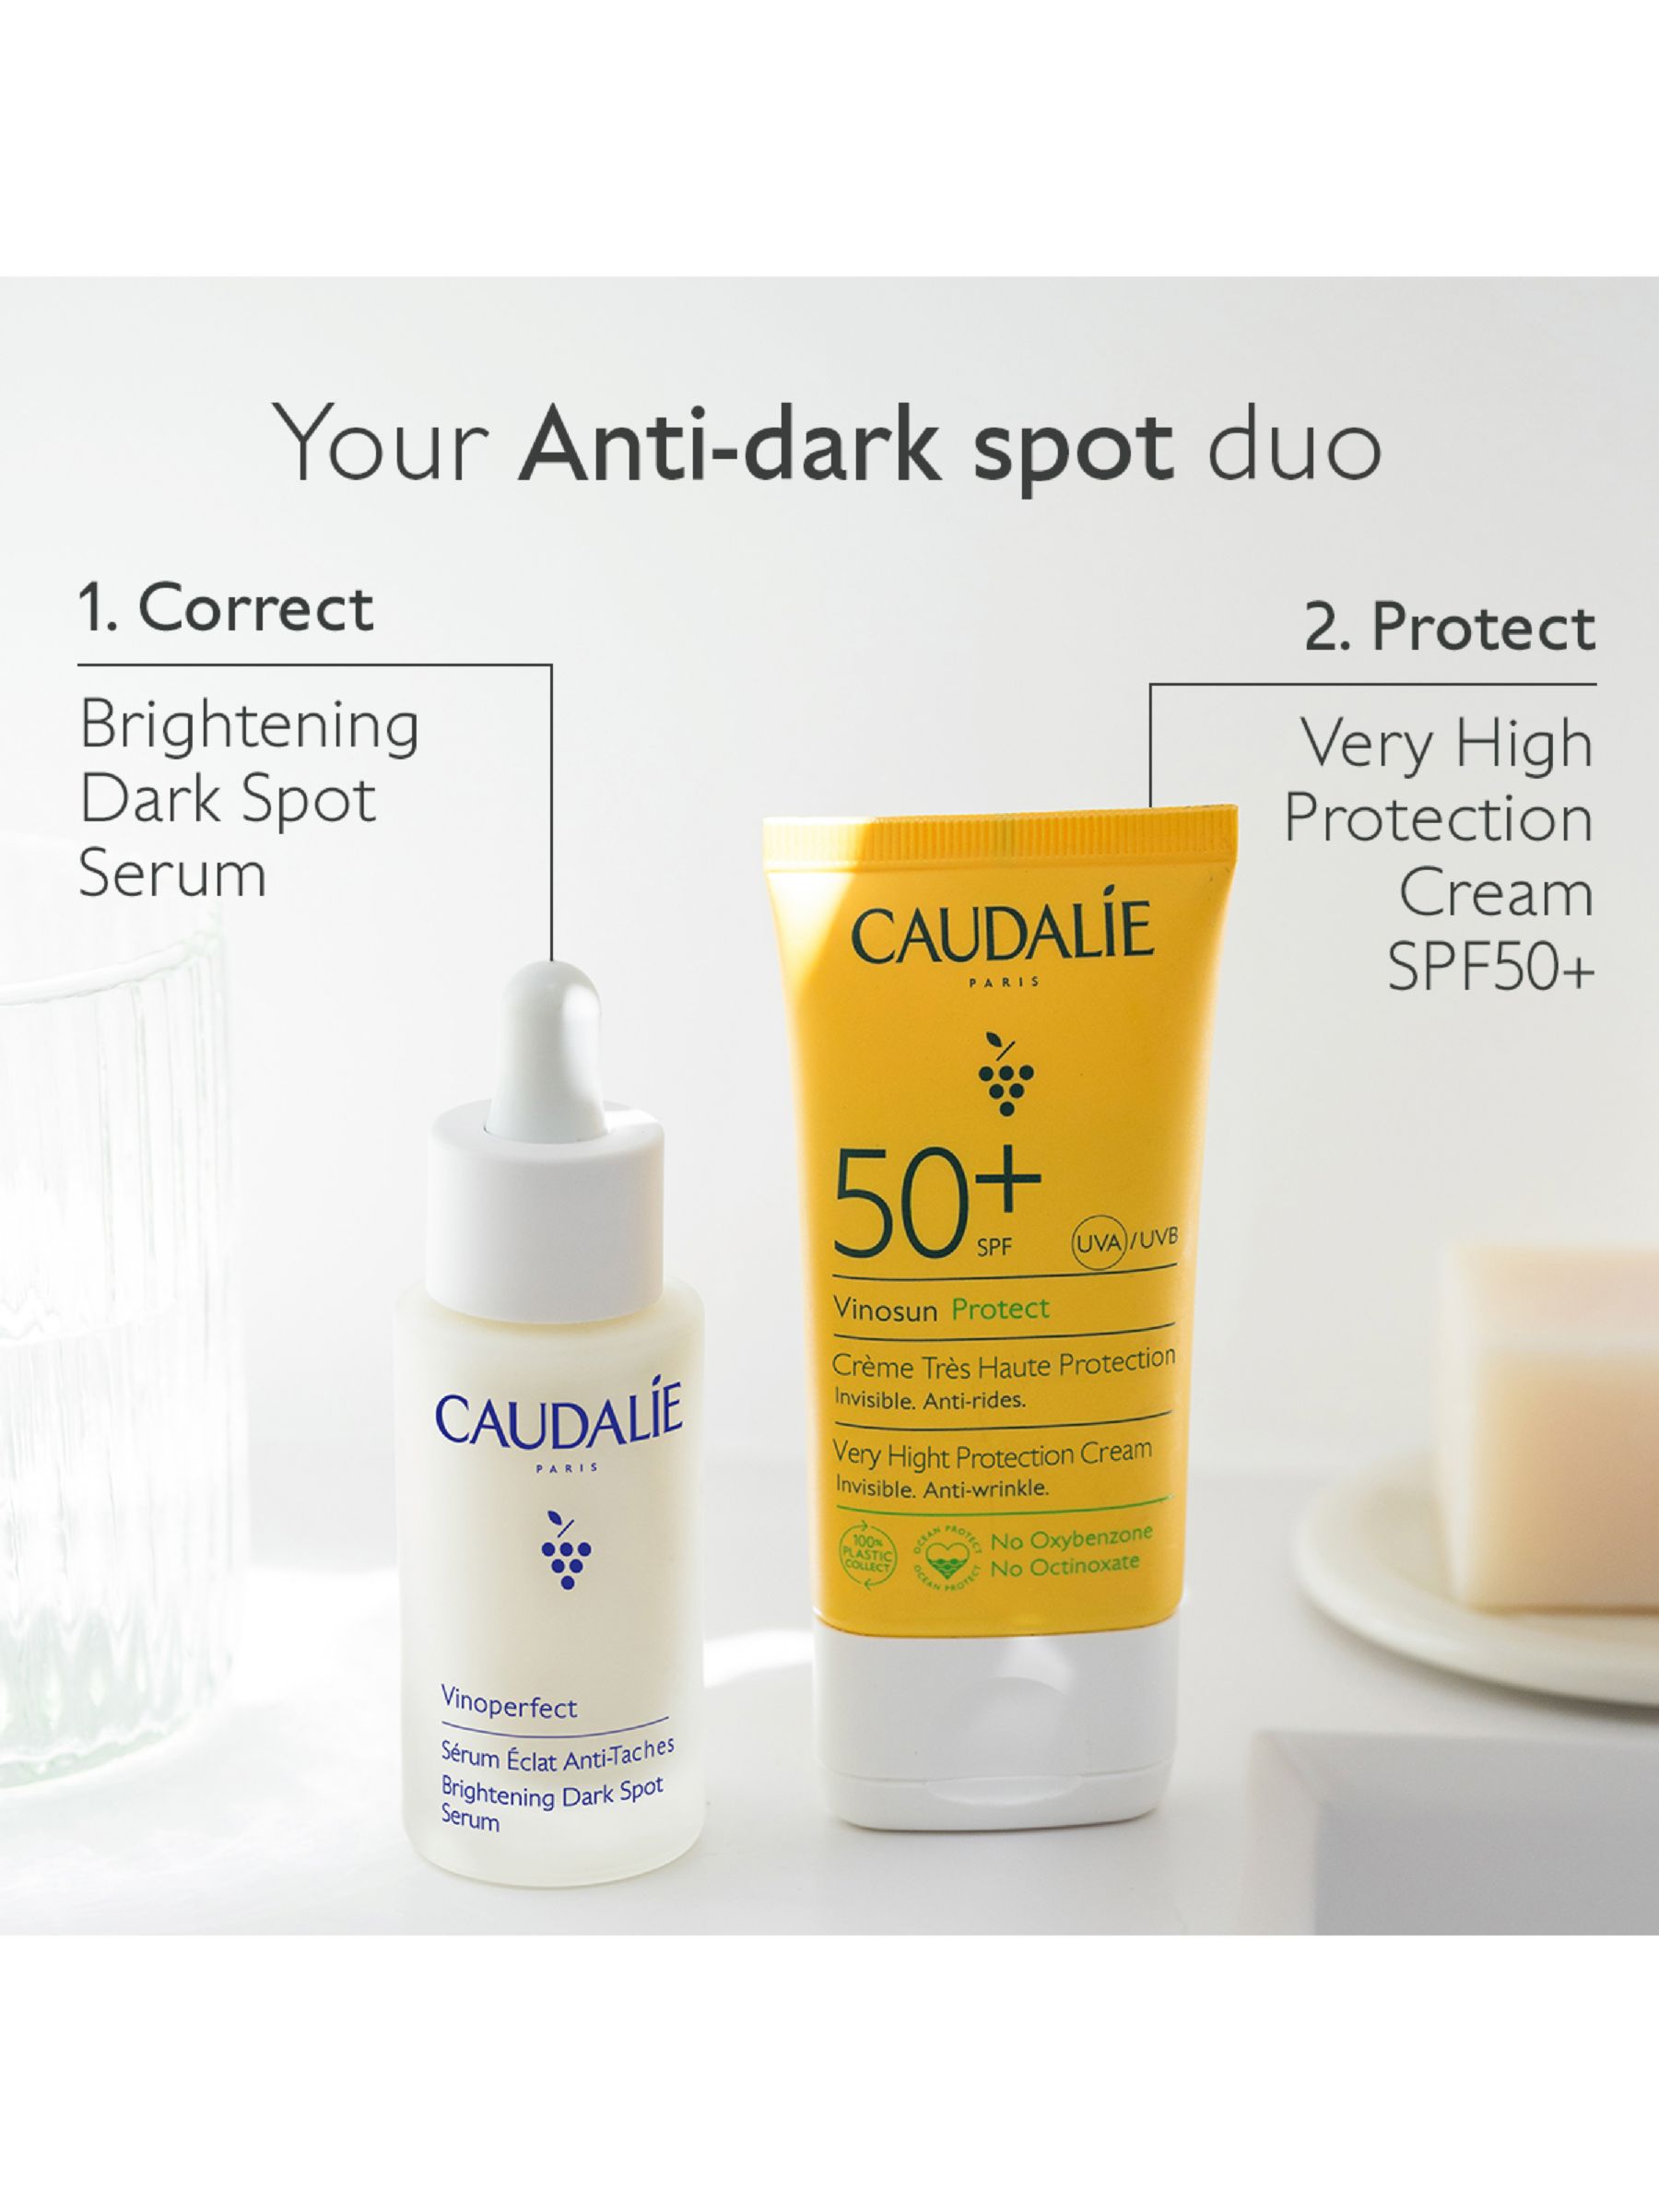 Caudalie Vinoperfect Serum and Suncare Skincare Gift Set